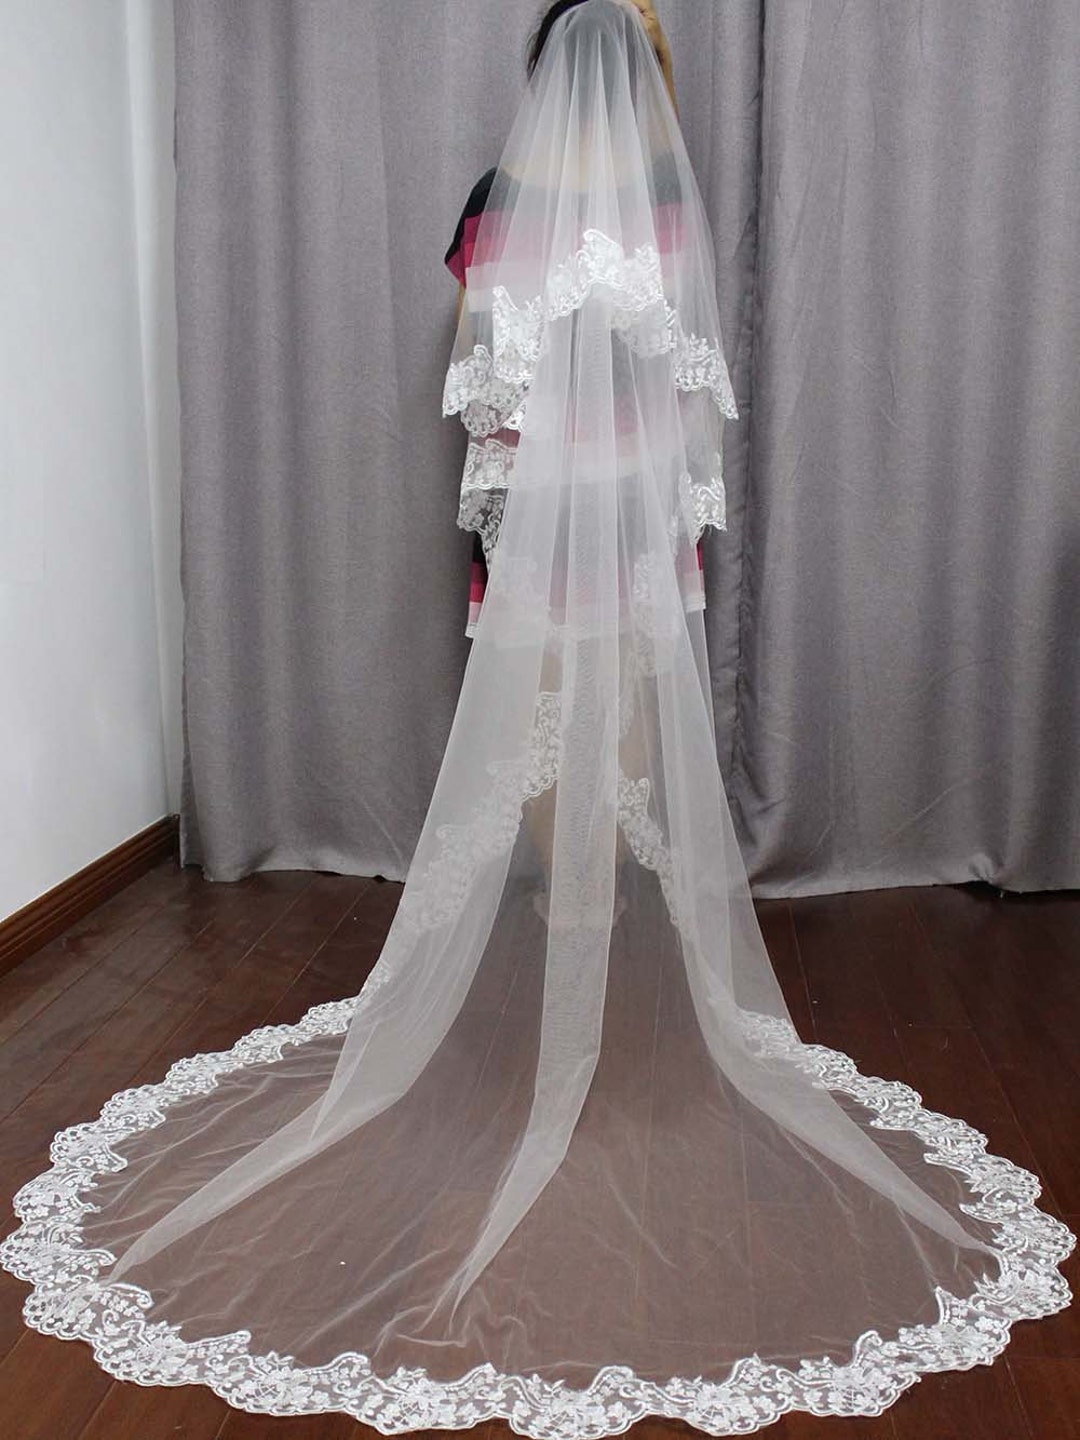 Minimalist Simple Style 2 Tier Double-Layer Women Mesh Fingertip Length  Wedding Veil Plain Pleated Drape Bridal Veil With - AliExpress